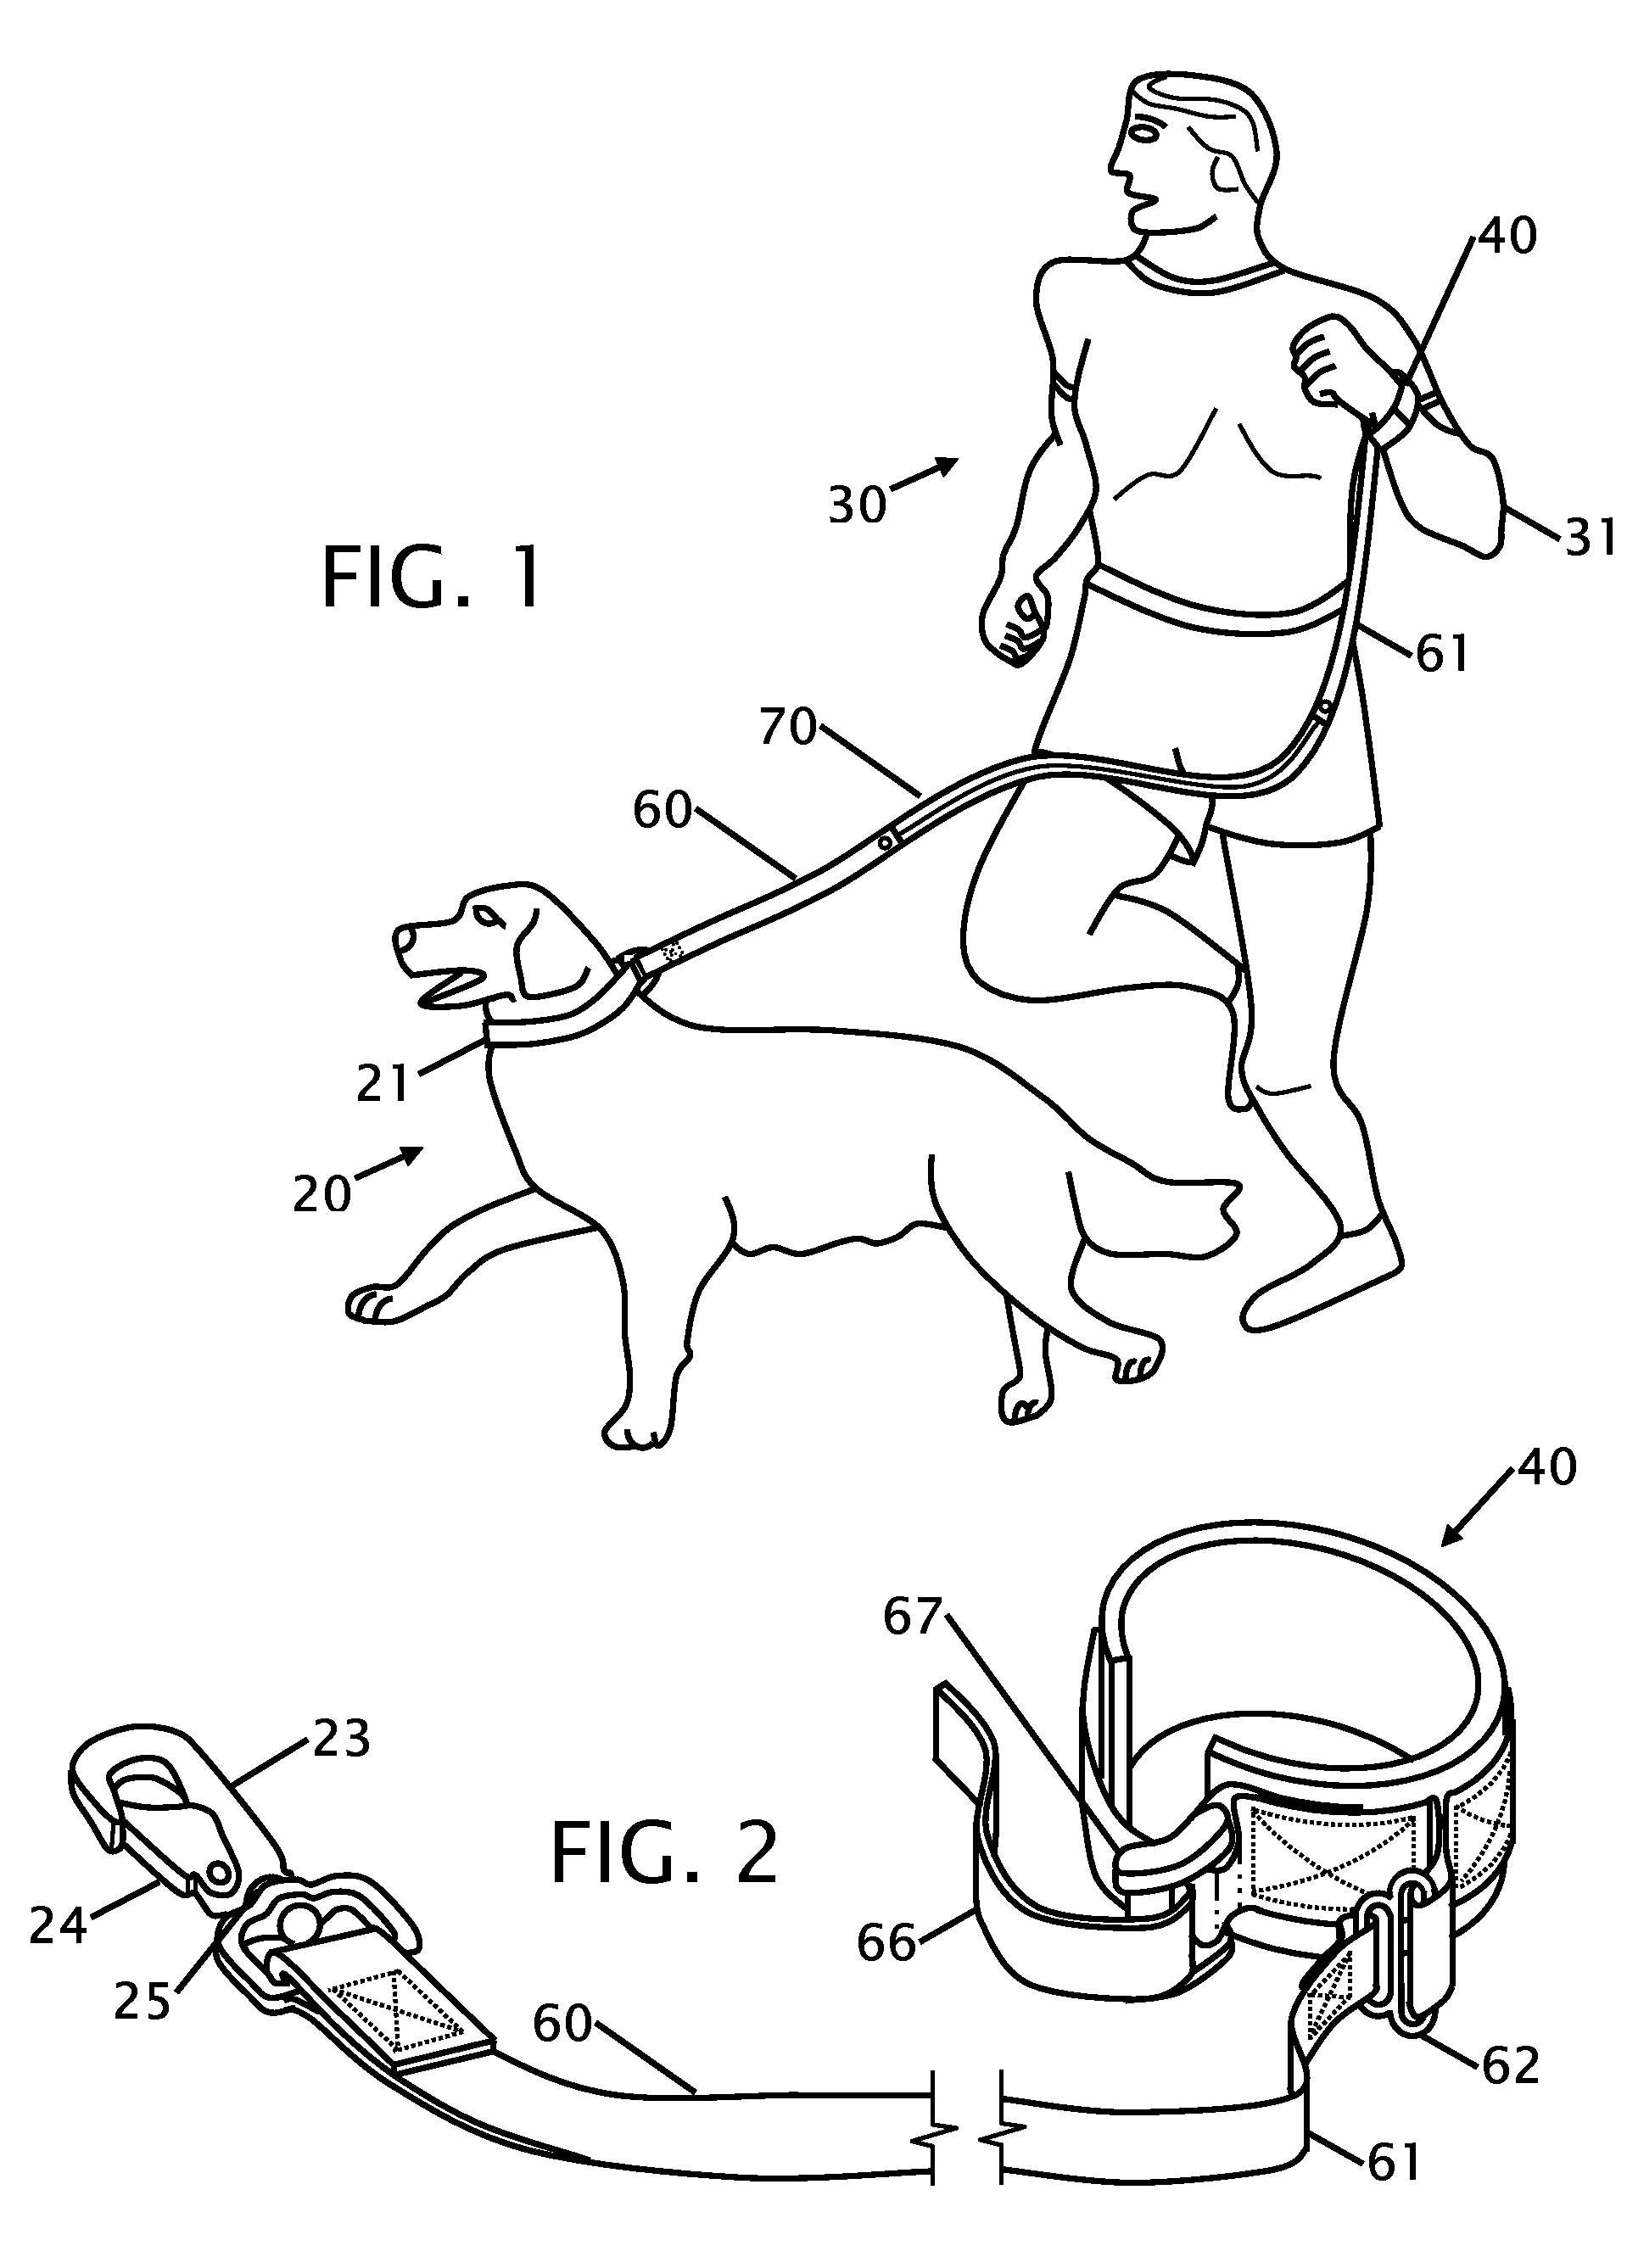 Exercising dog leash warn on a users wrist